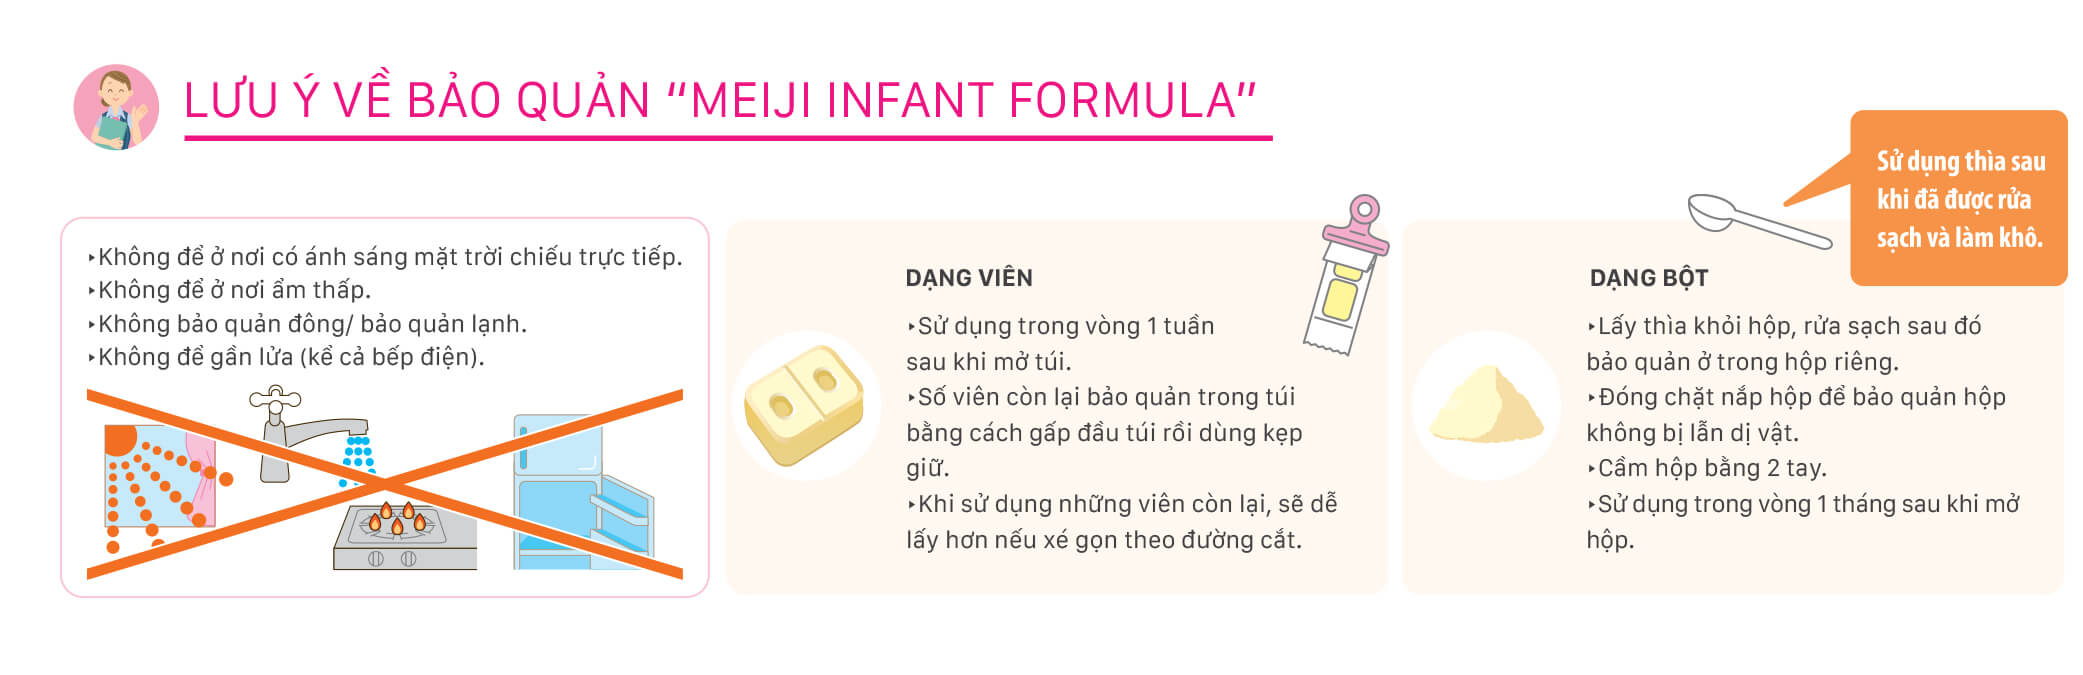 Cách bảo quản sữa Meiji Infant Formula